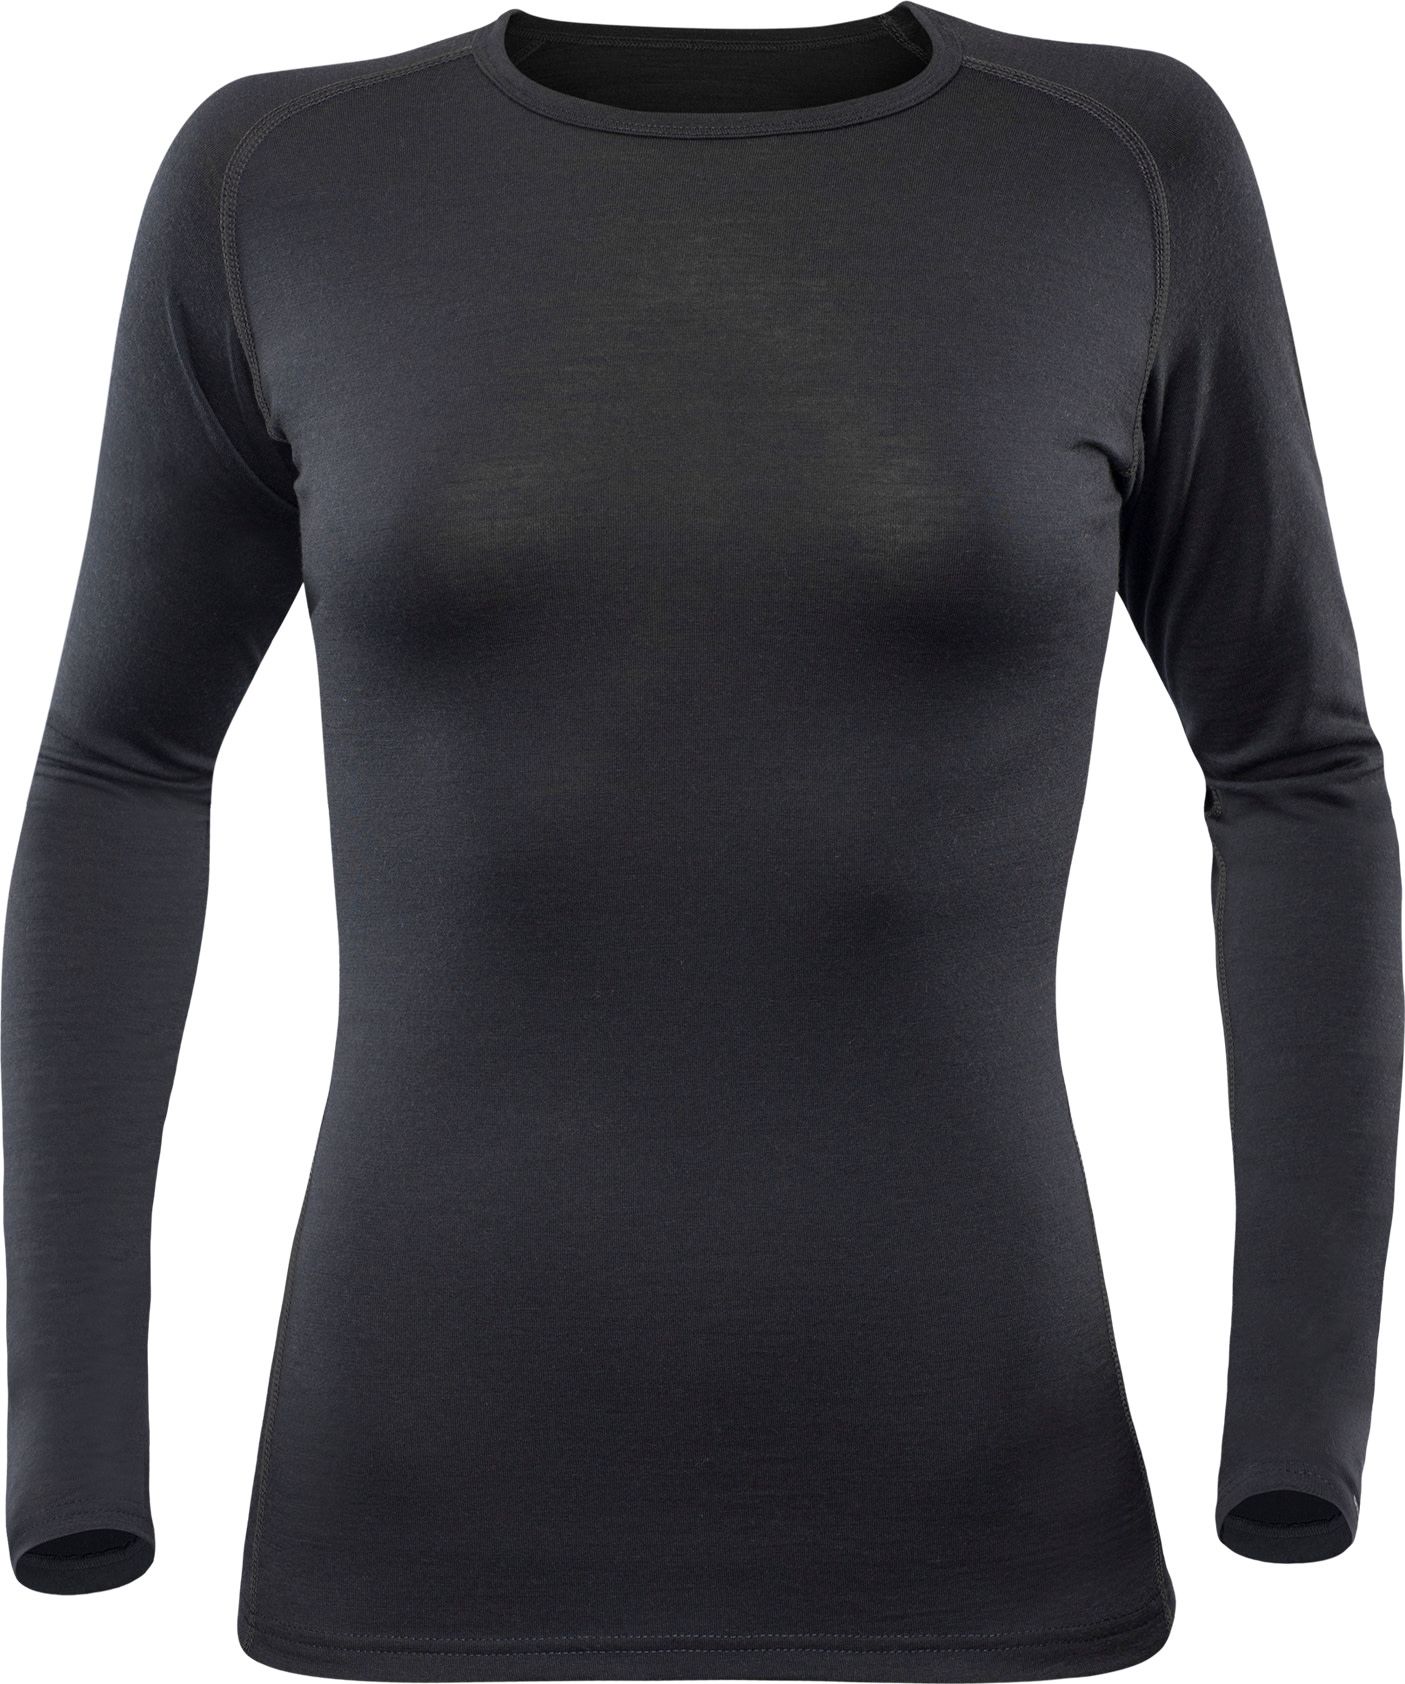 Devold Women's Breeze Shirt Black